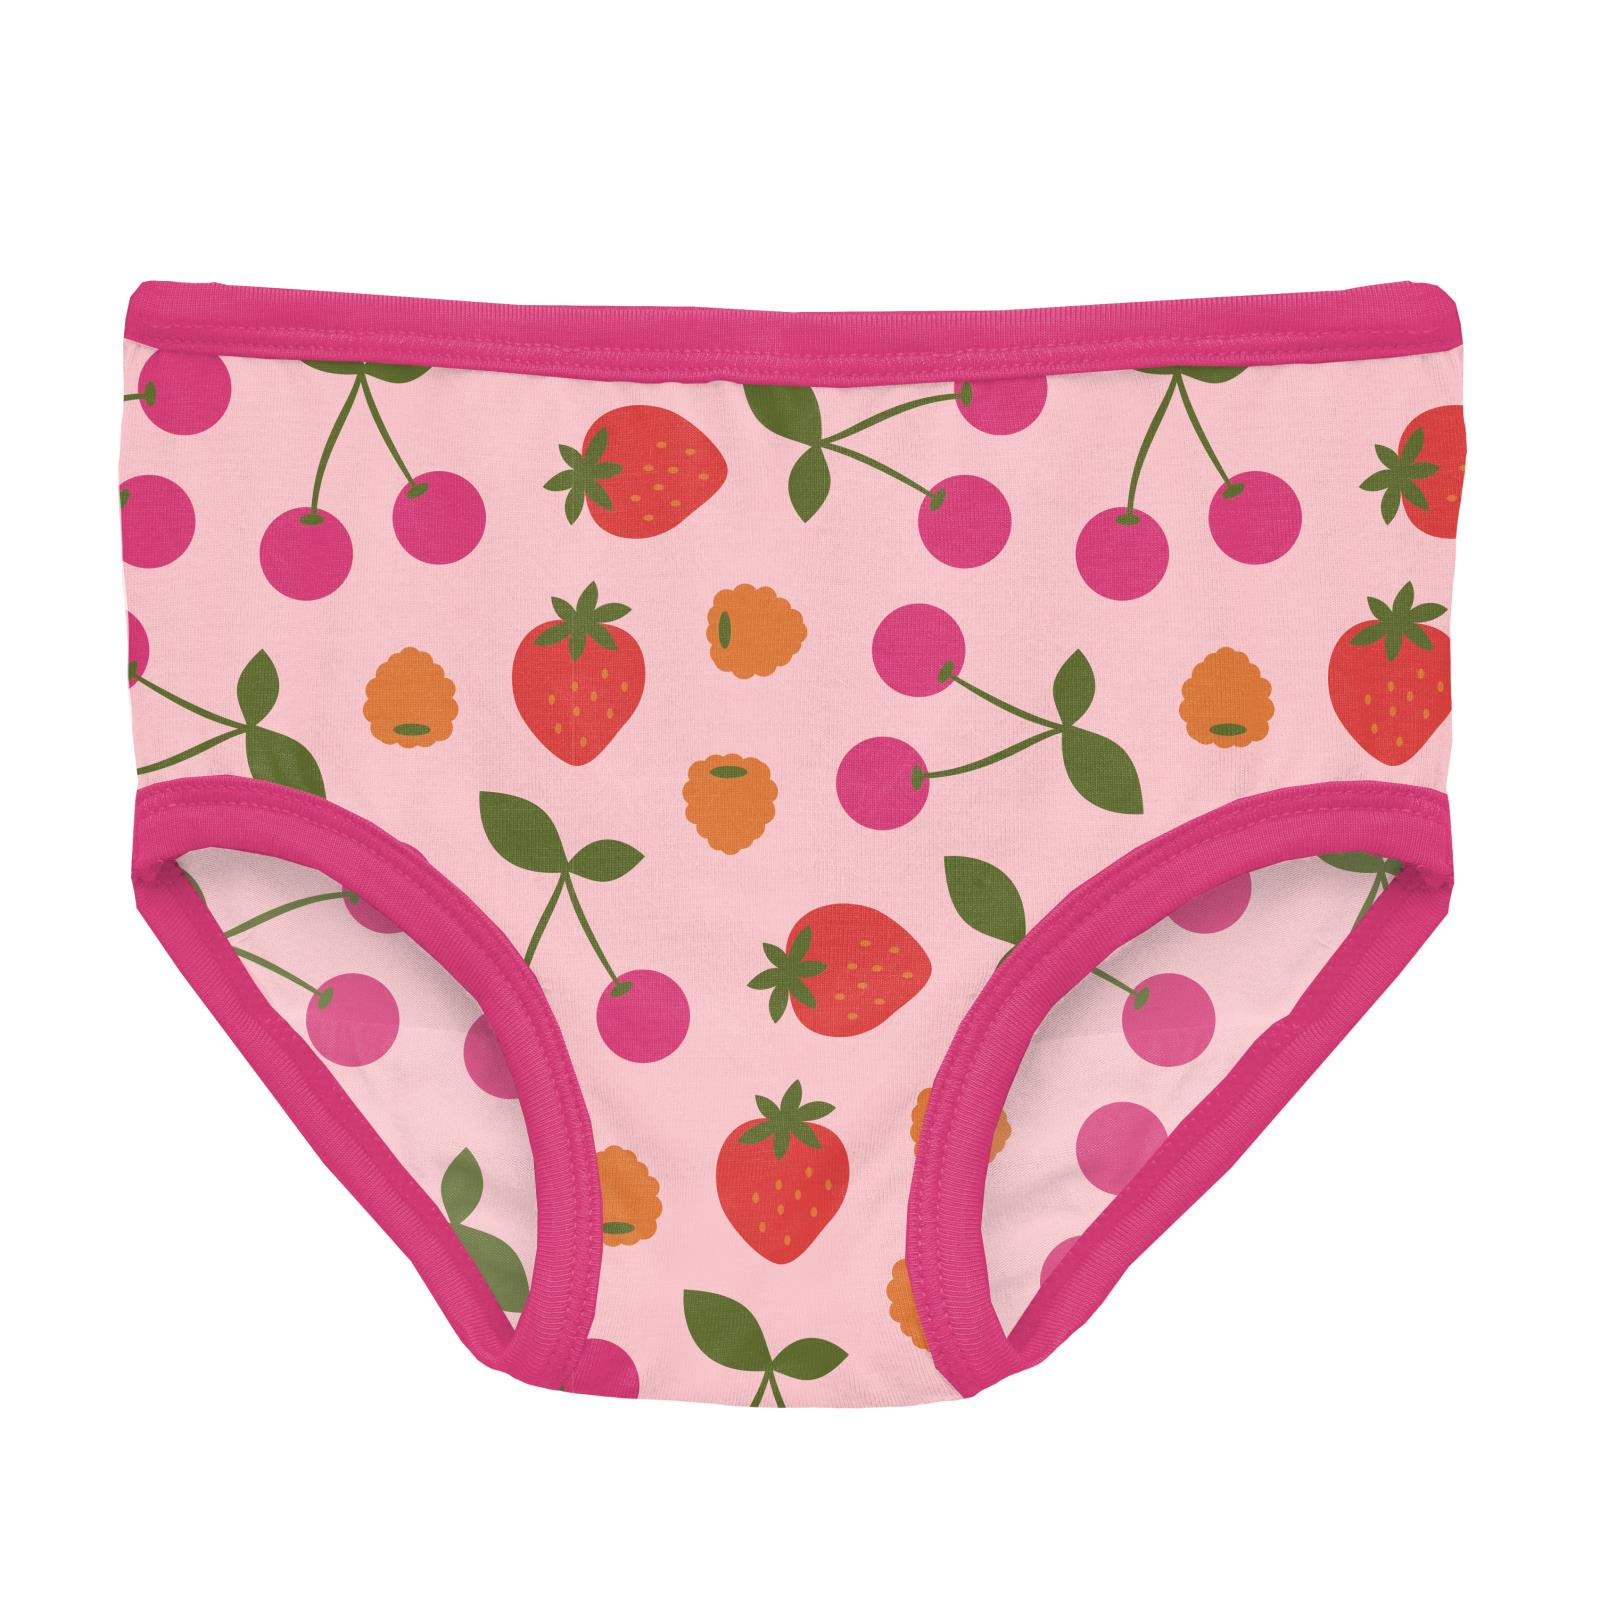 Kic Kee Pants KicKee Pants Girls Underwear, Set of 3, Prints and